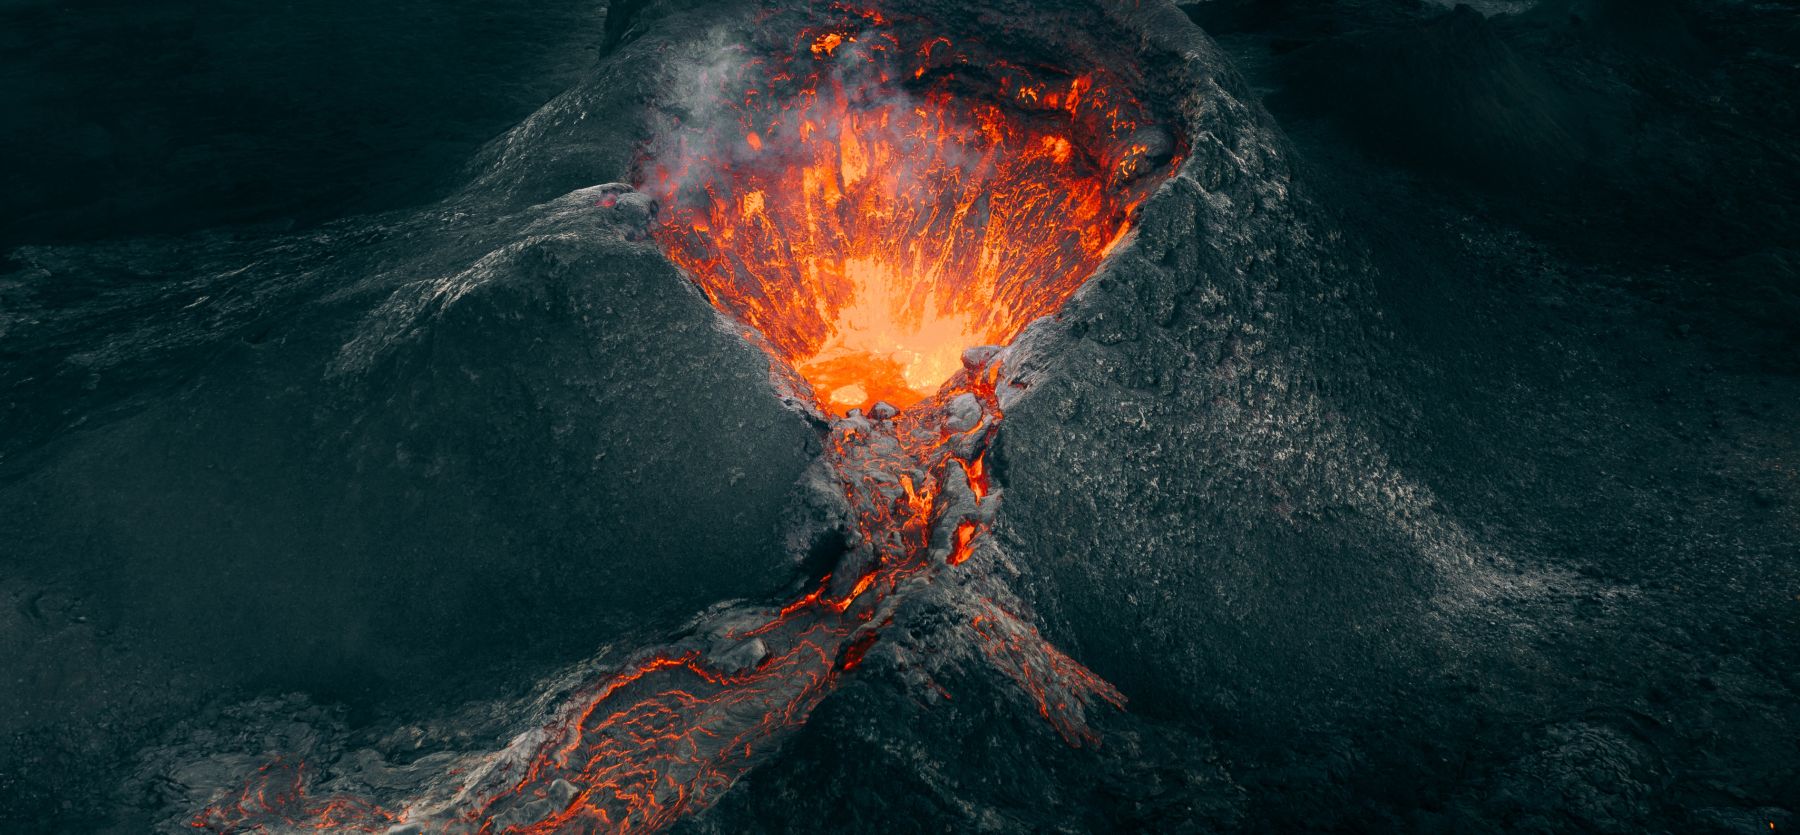 Flowing lava